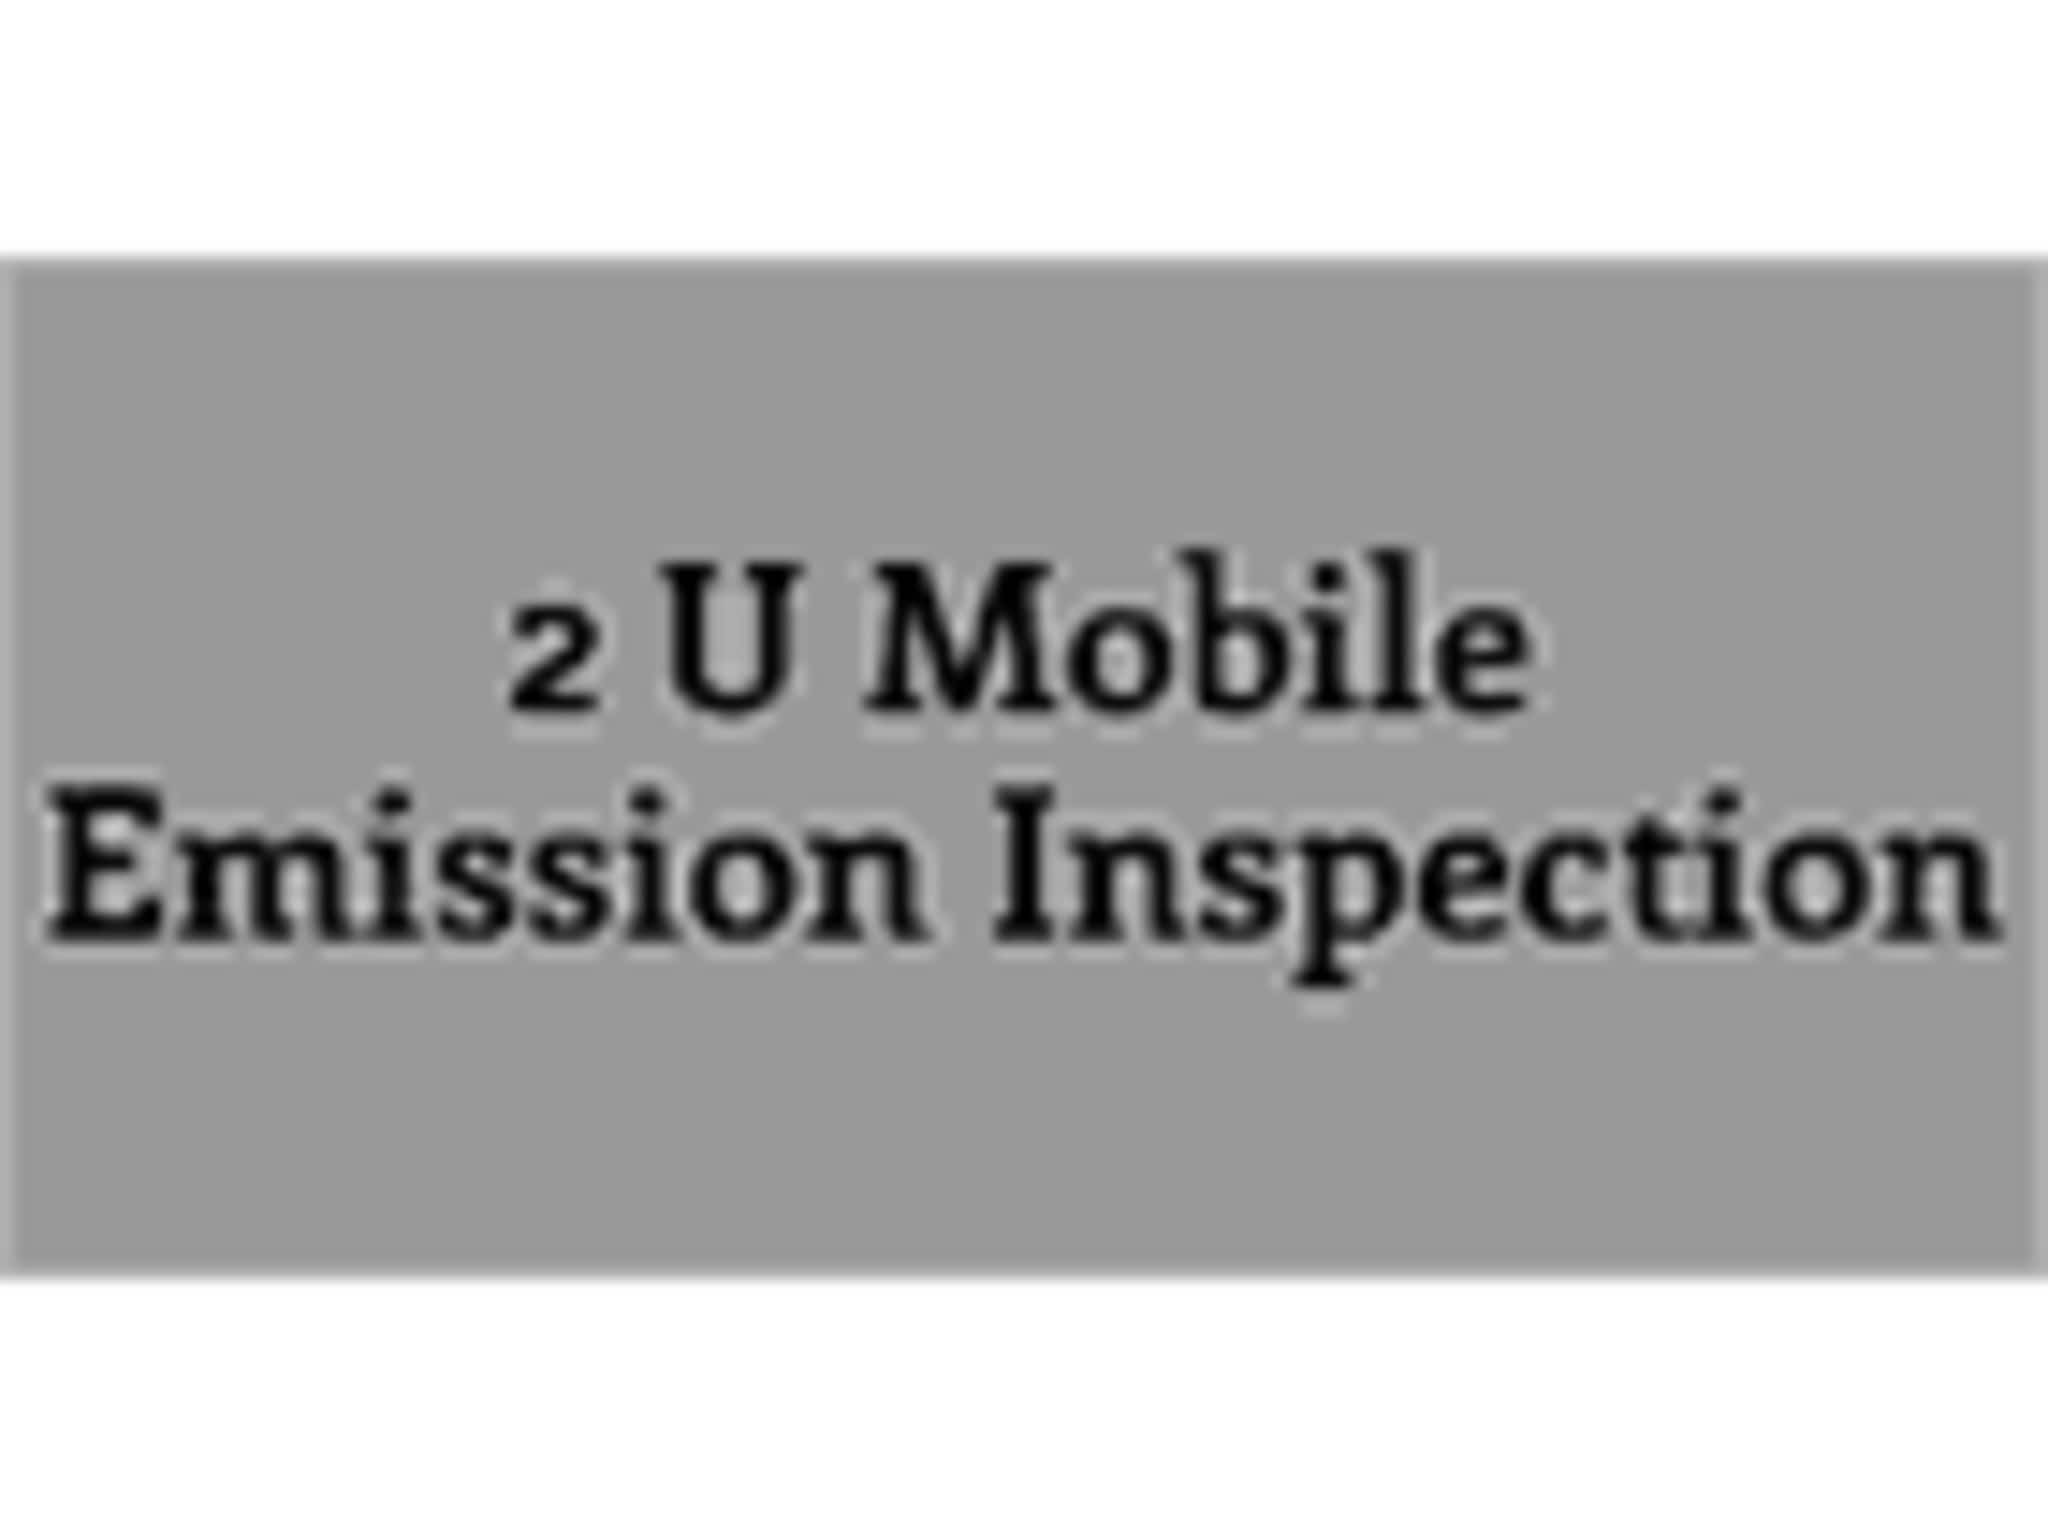 photo 2U Mobile Emission Inspections